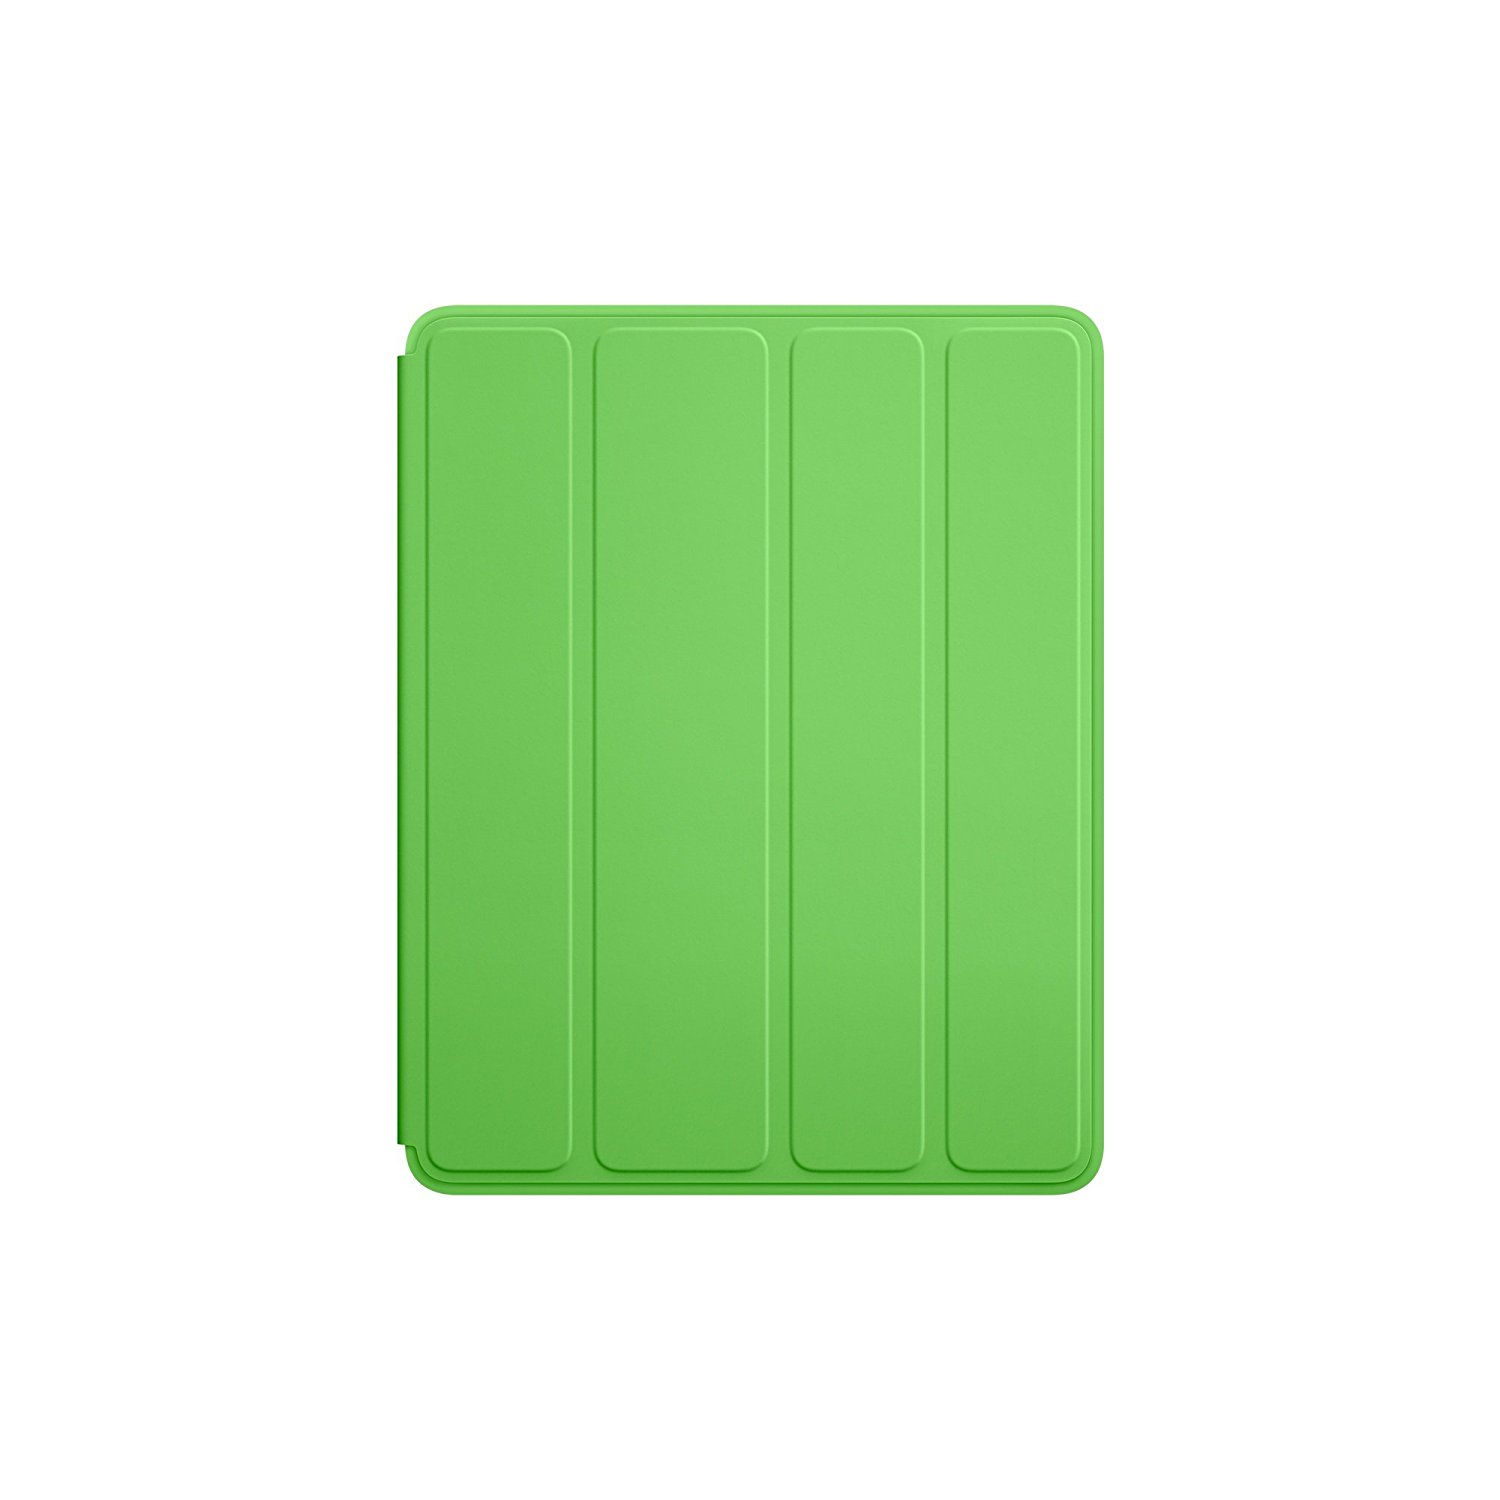 Ipad smart case green - zmlmd457zm/a